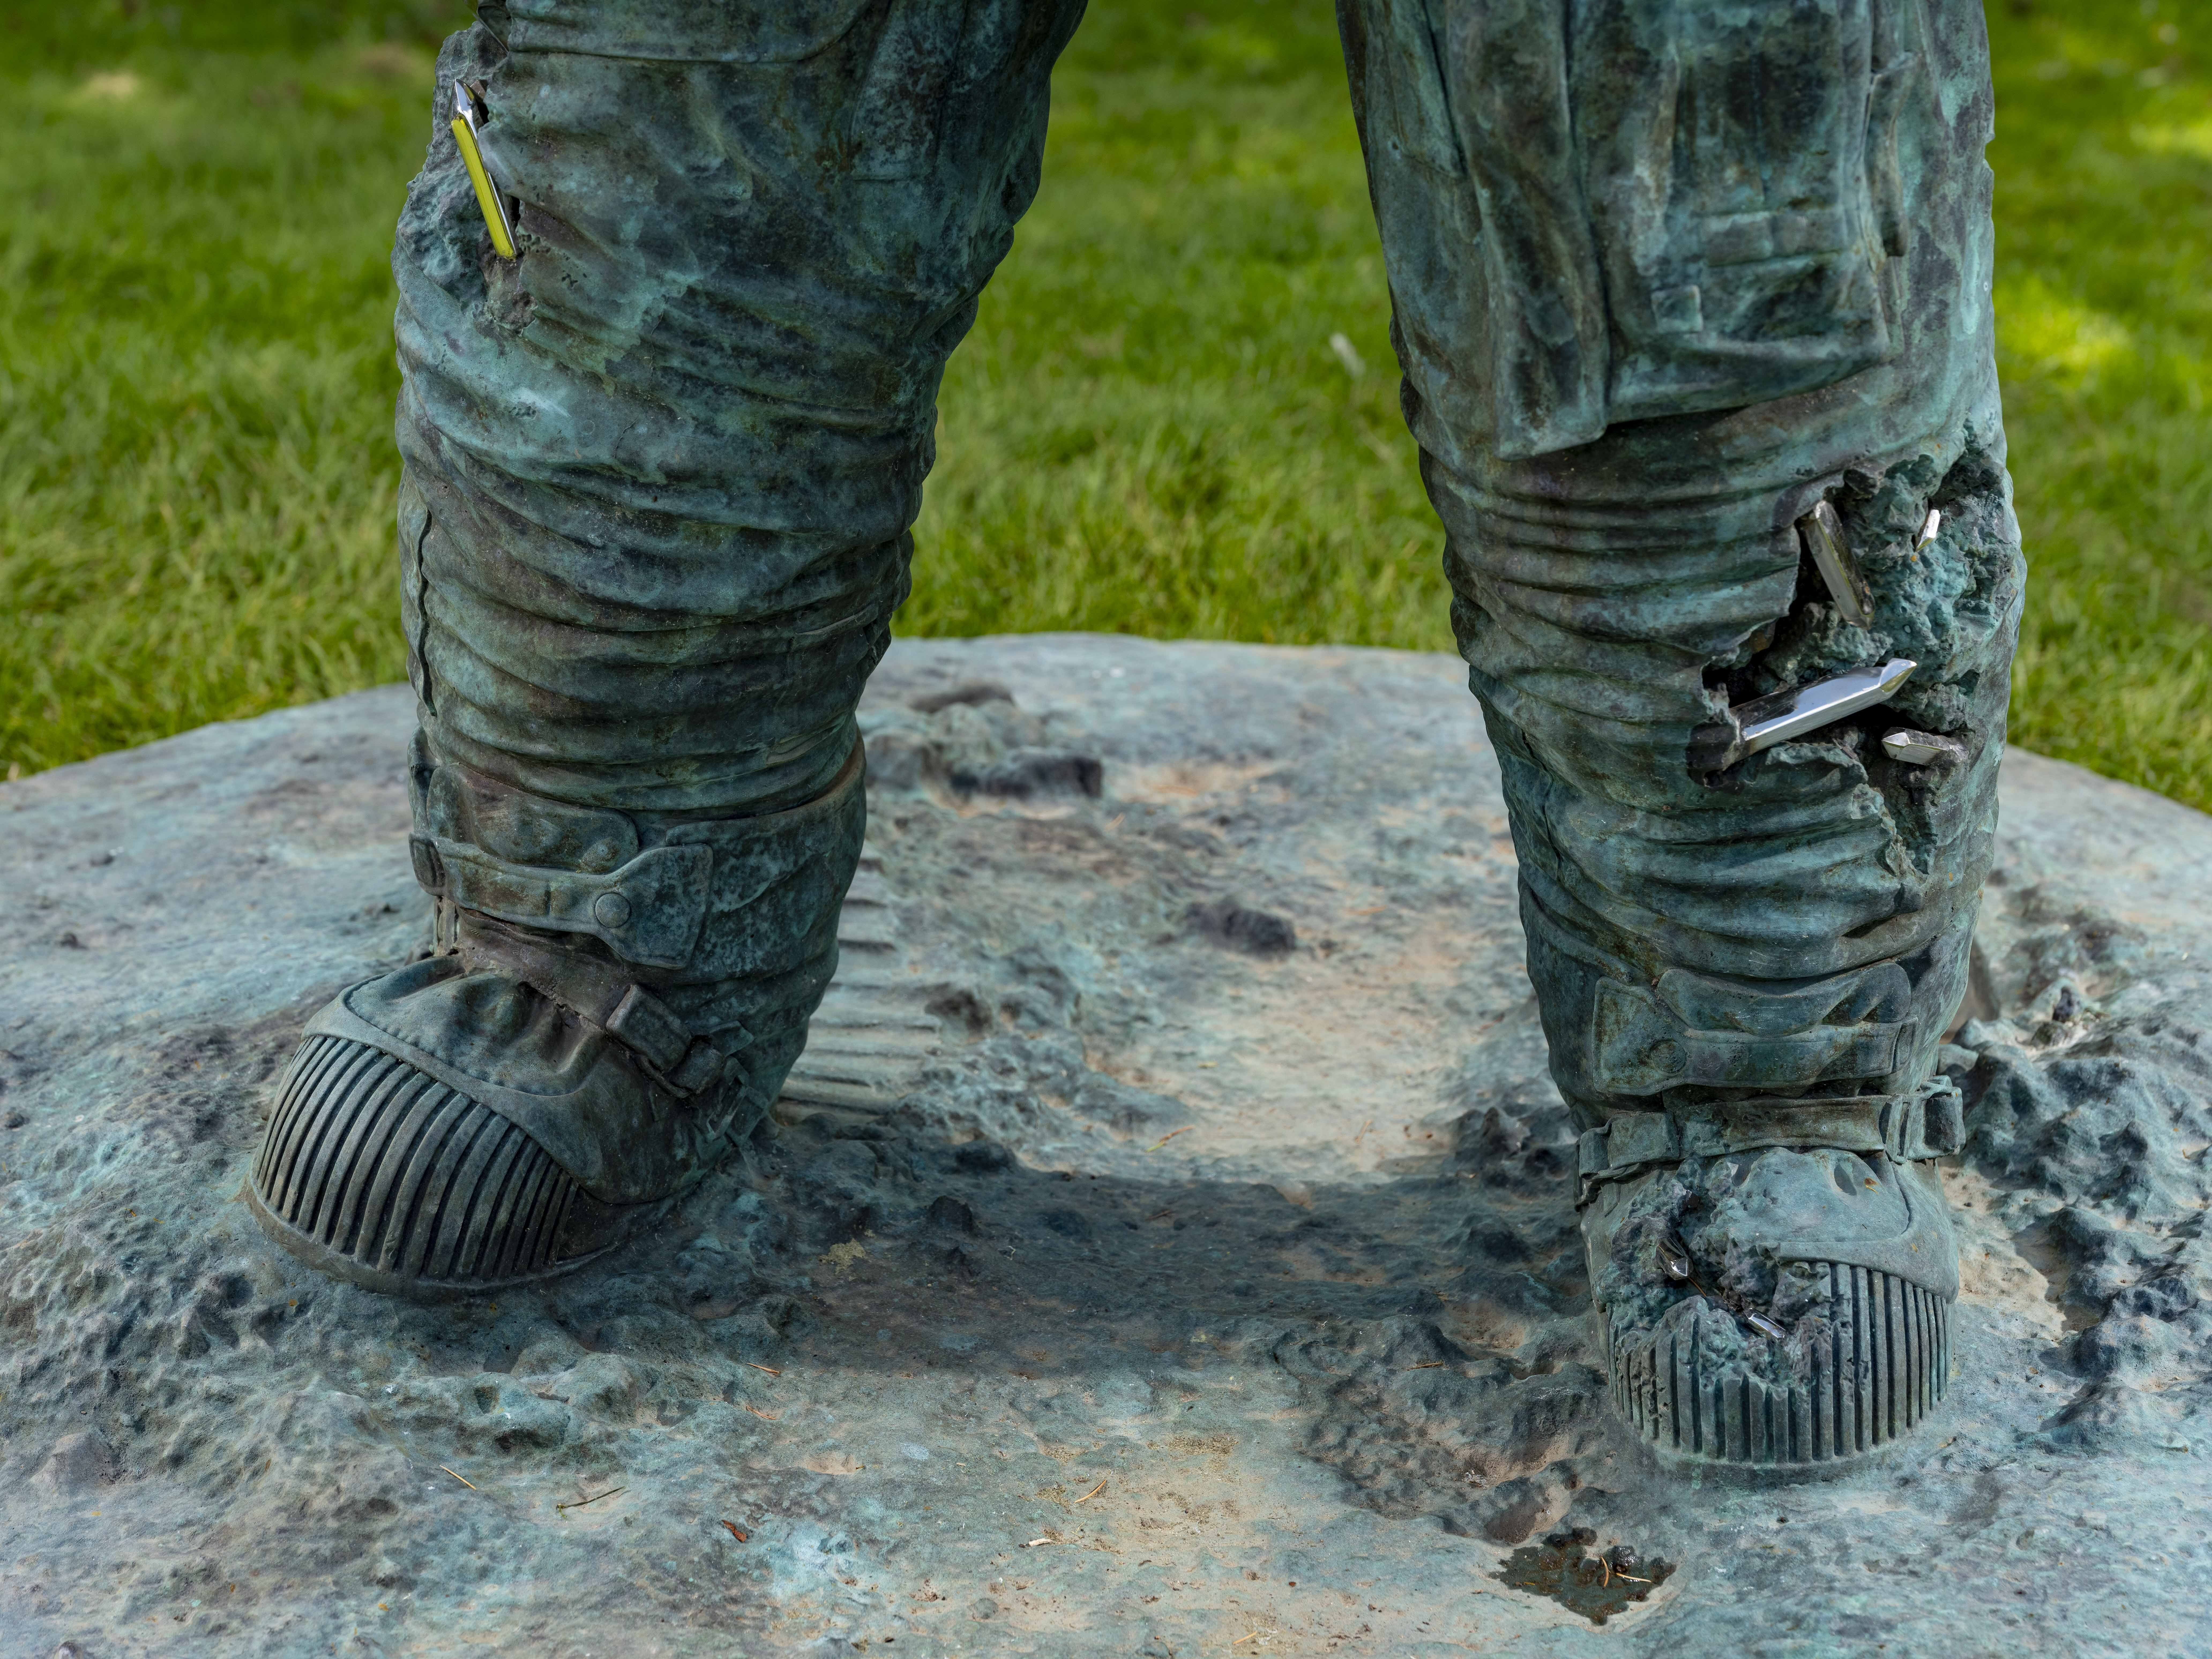 A close up of the legs of an astronaut sculpture